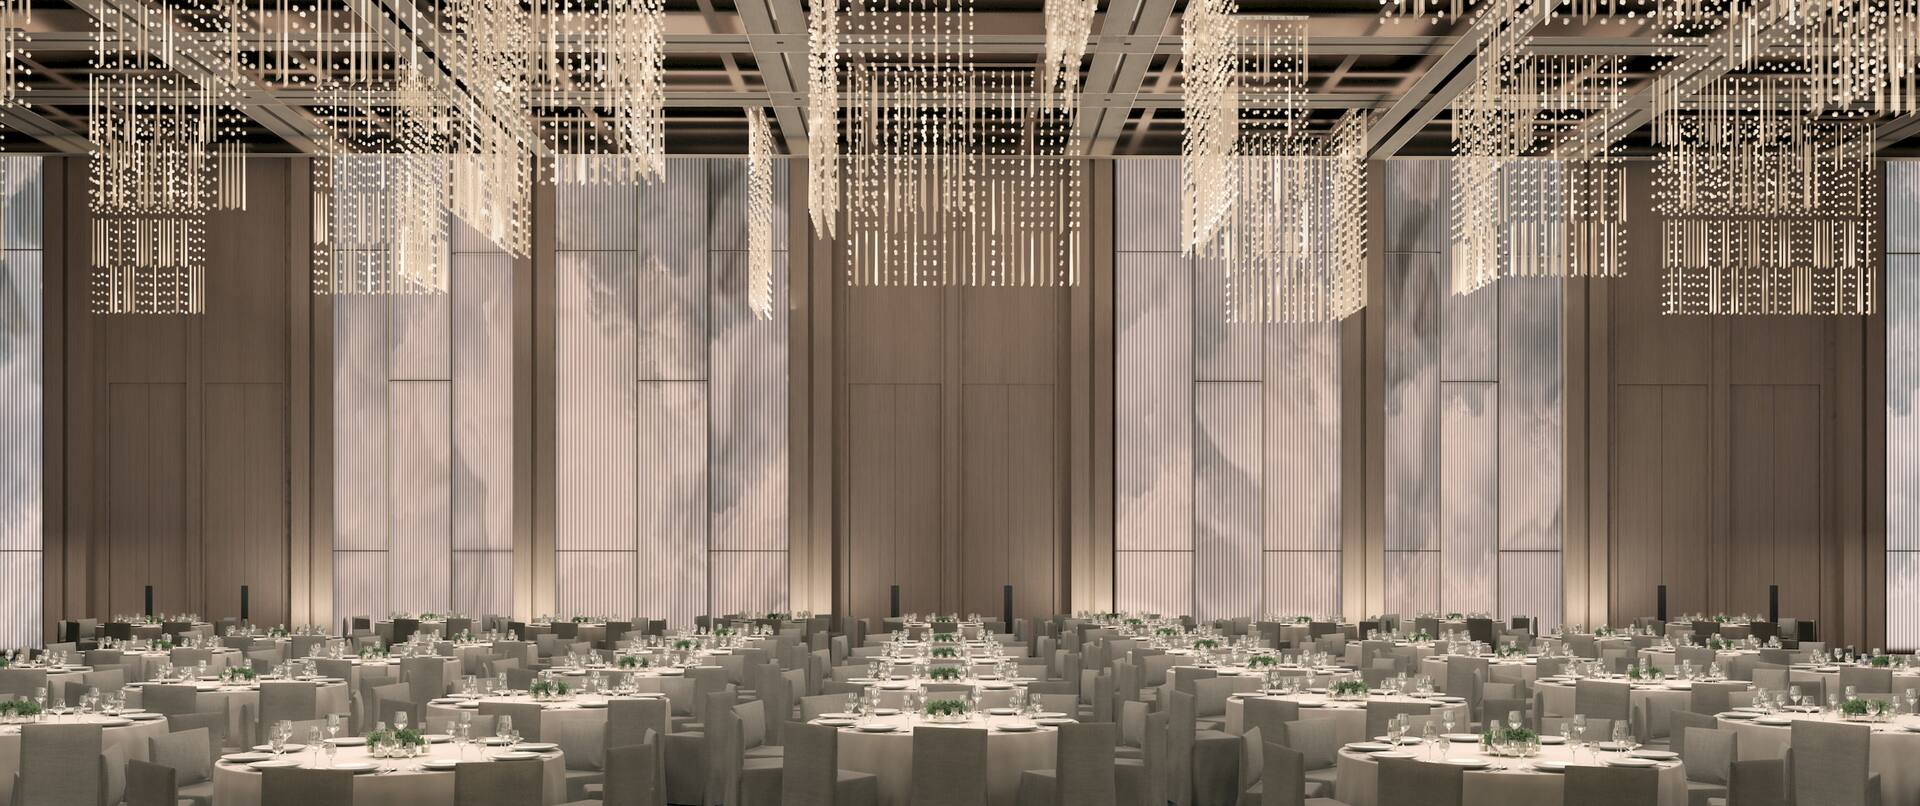 Ballroom with banquet tables setup